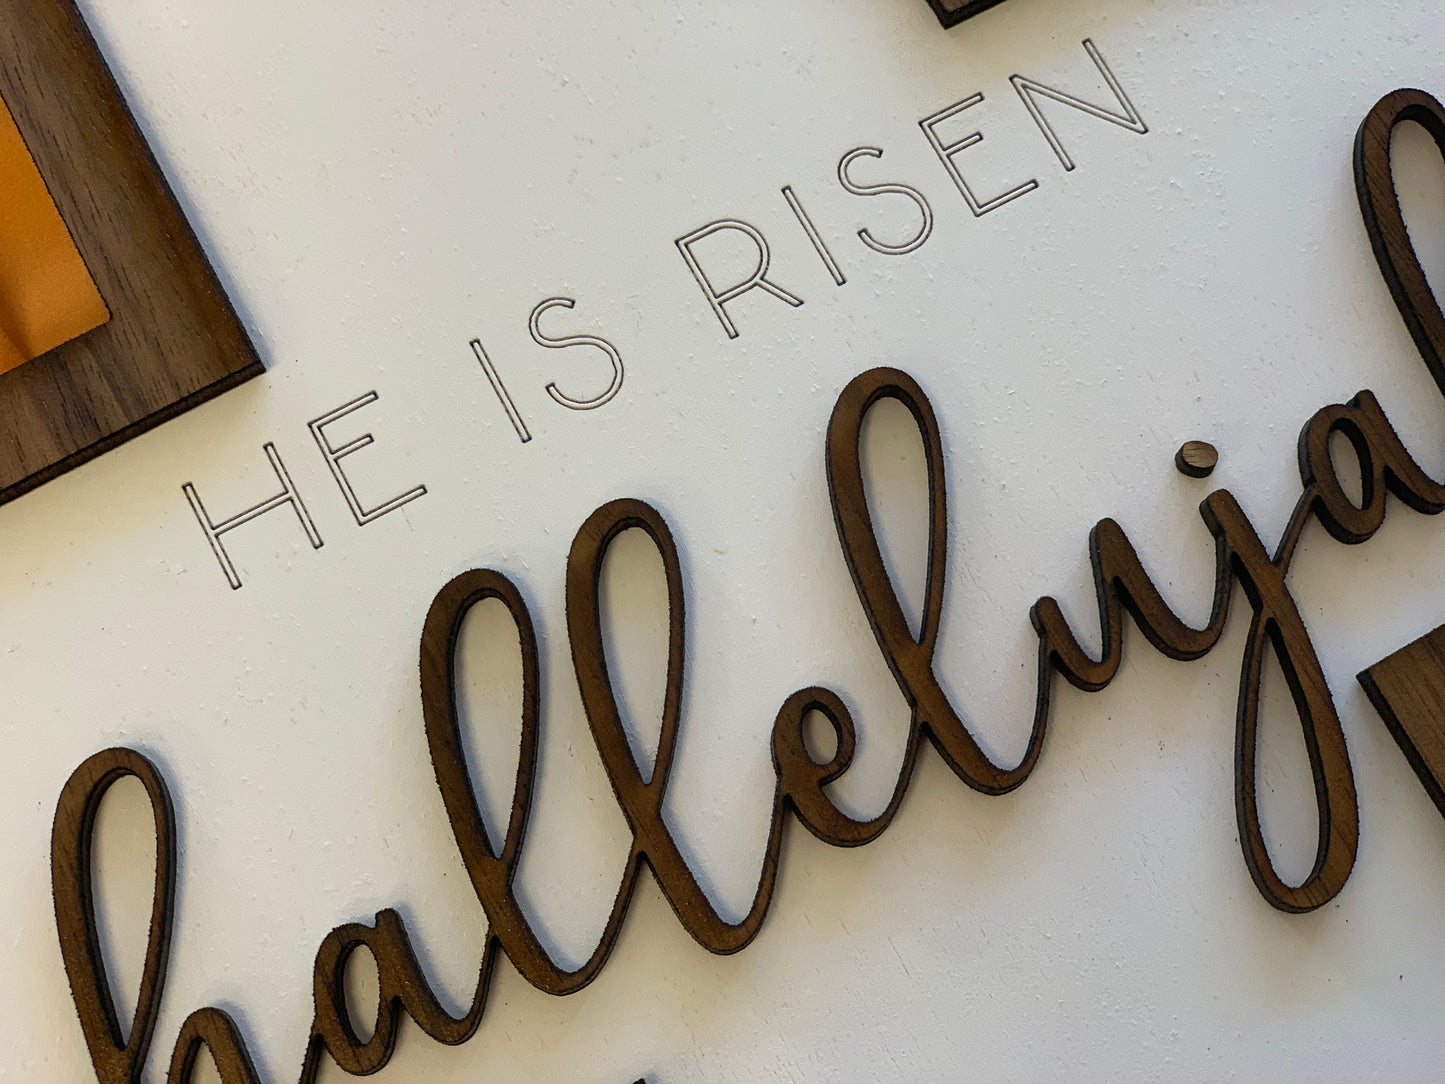 CROSS LAYERED: Hallelujah He is Risen Easter Glowforge Ready Laser FILE